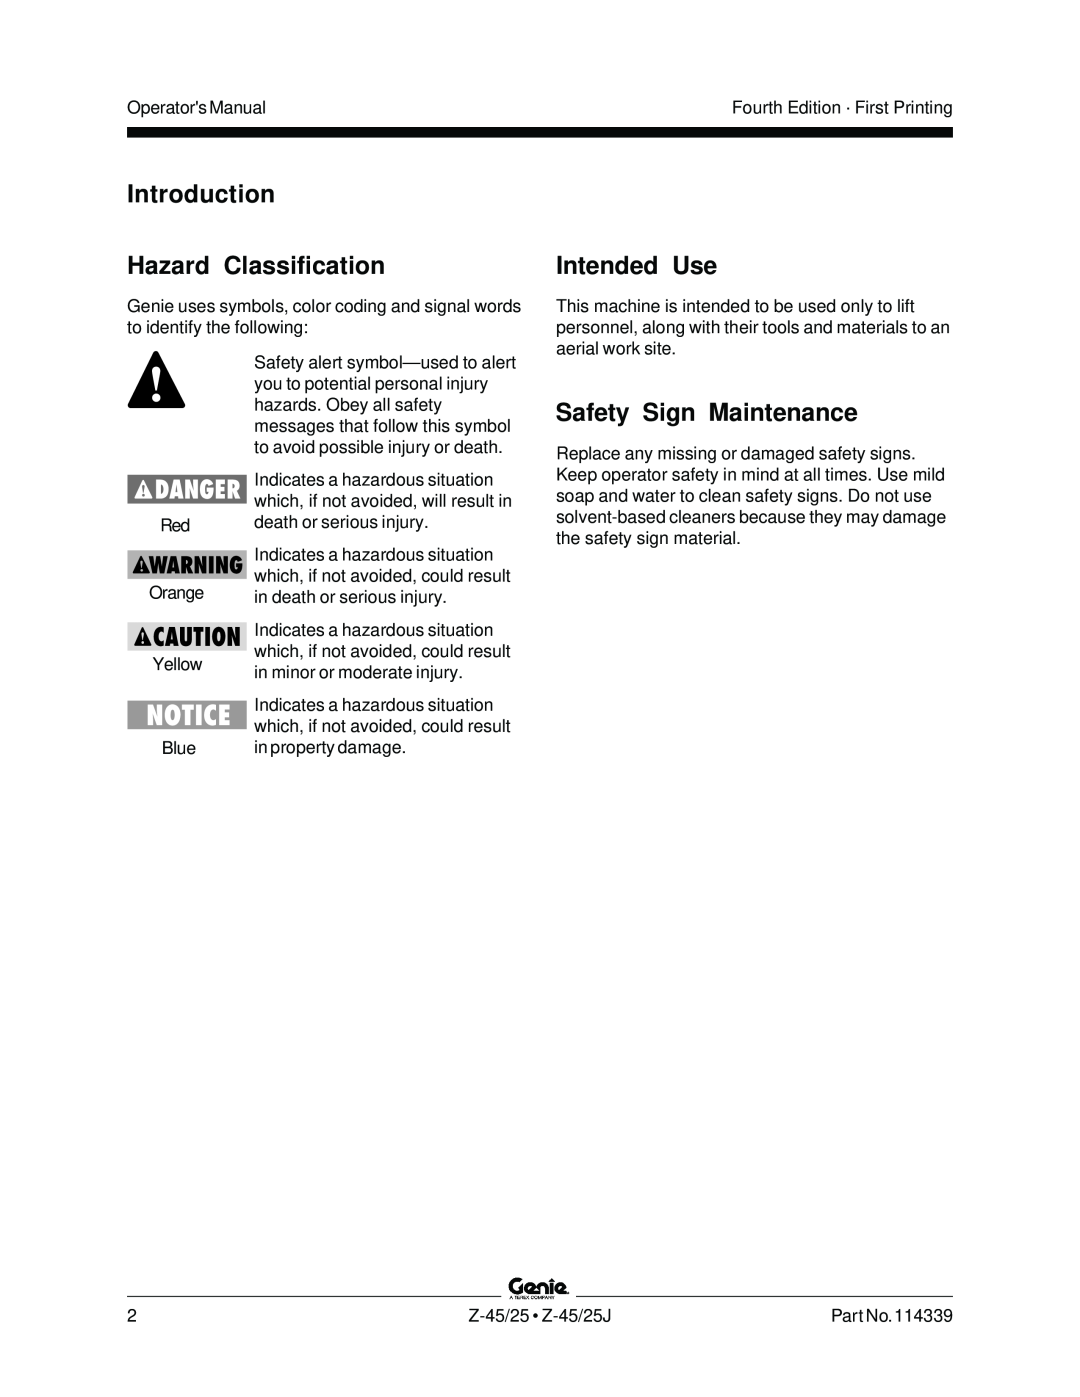 Genie Z-45, Z-25J manual Introduction Hazard Classification, Intended Use, Safety Sign Maintenance 